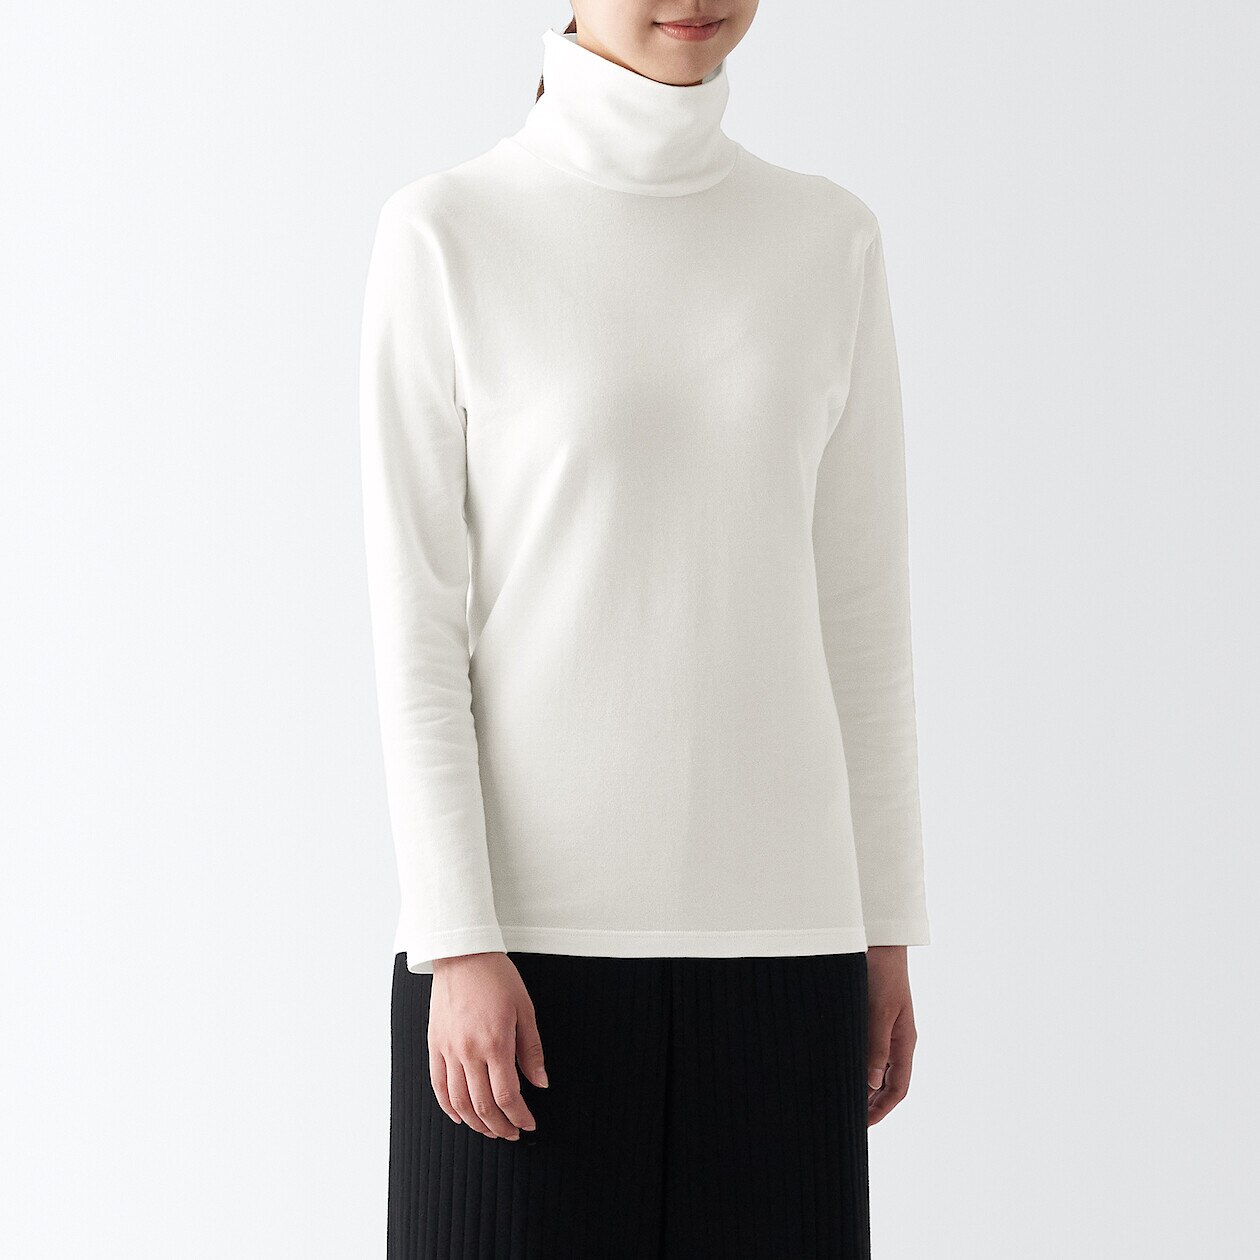 Women's Cotton and Wool High Neck Long Sleeve T-shirt